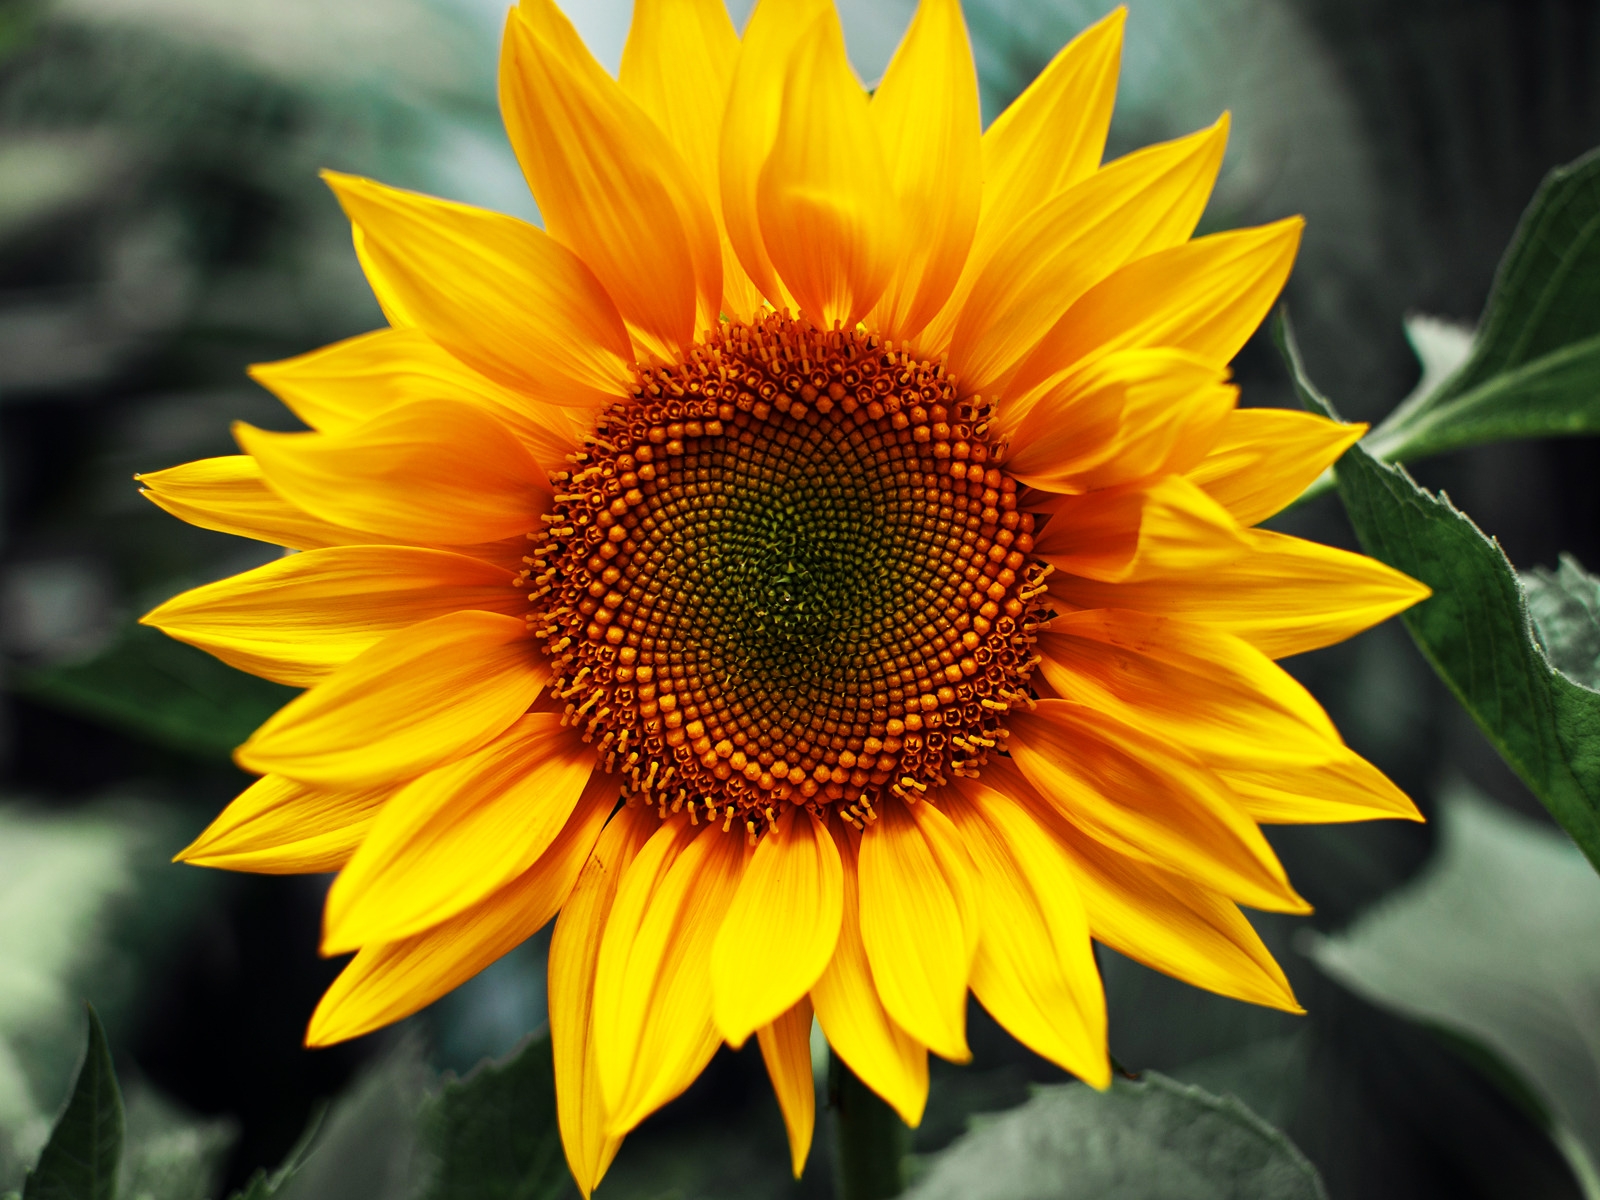 Just-Sunflower-HD-Wallpaper-Flowers-HD-Widescreen-Wallpapers-just-sunflower-1600x1200-wallpaper-4903.jpg